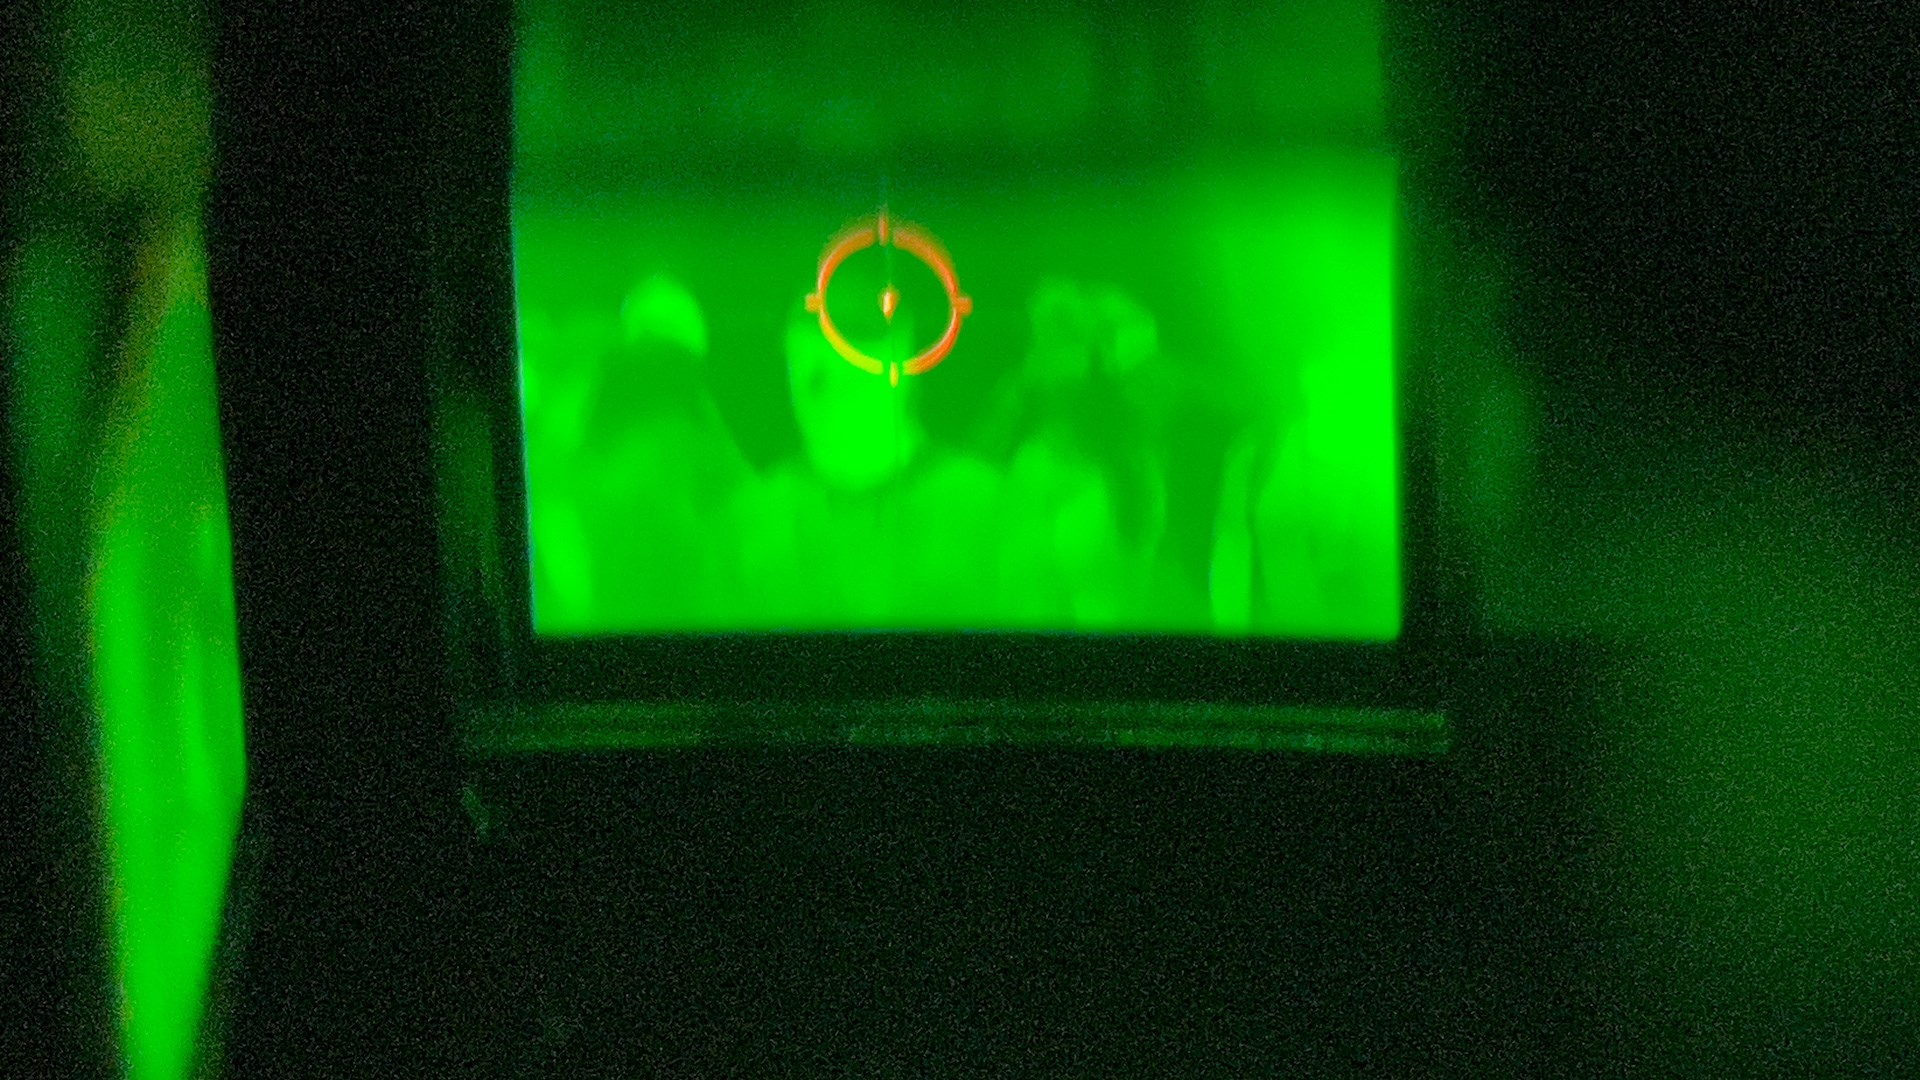 Holosun thermal sight